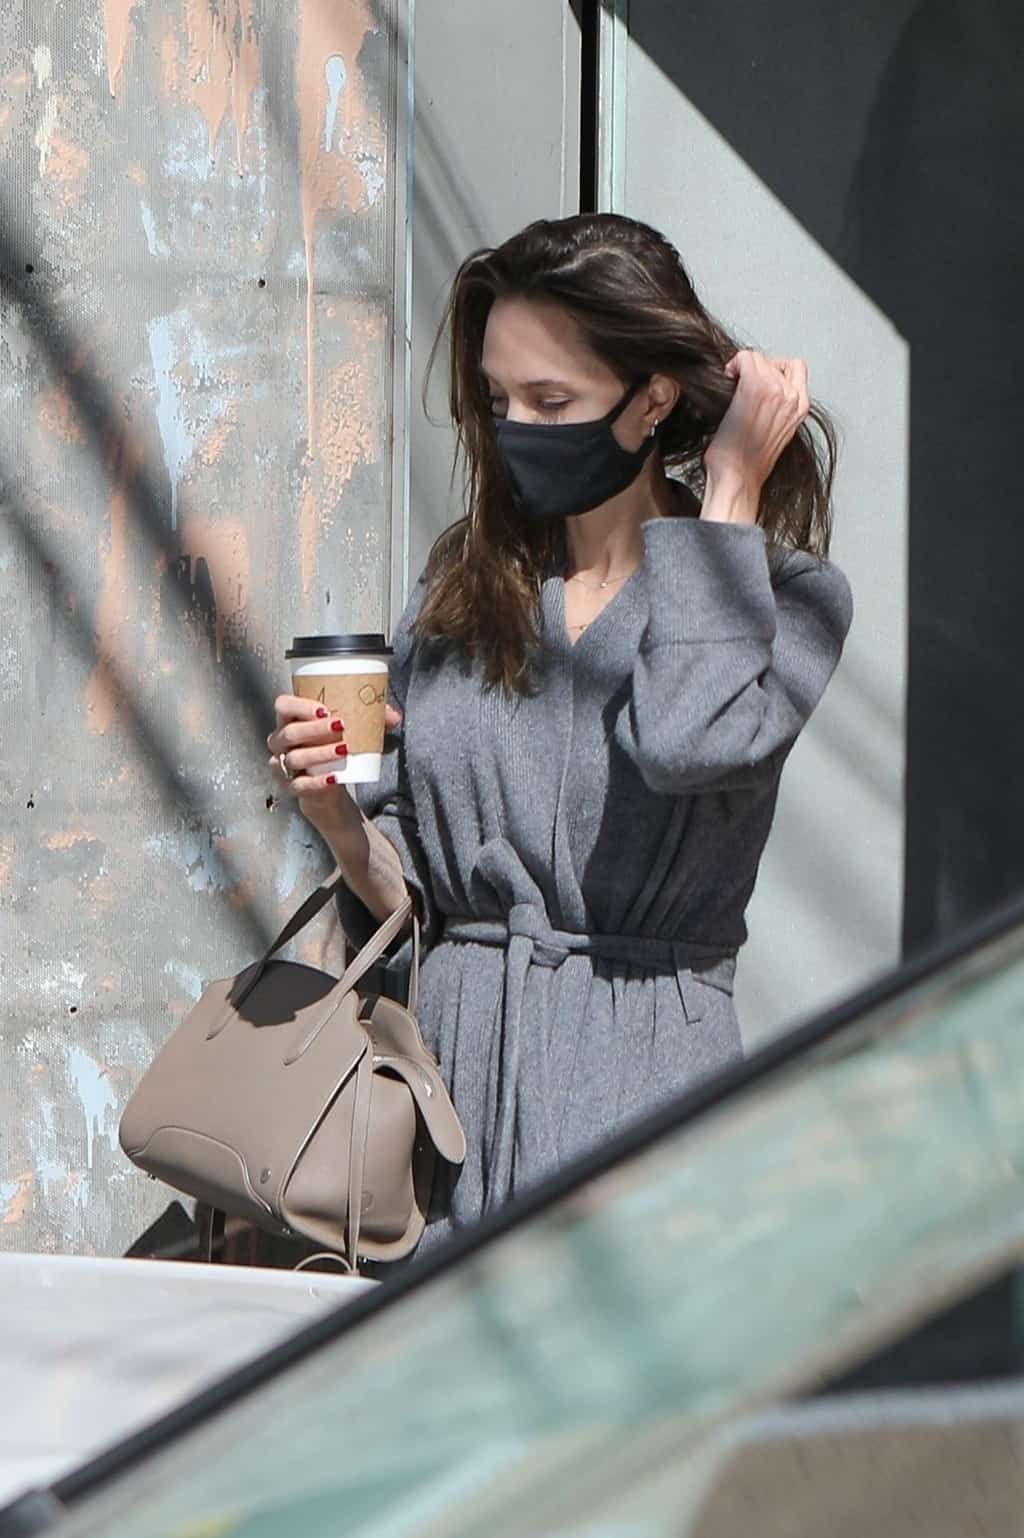 Angelina Jolie Outside the “Catwalk Designer Vintage” Store in Los Angeles